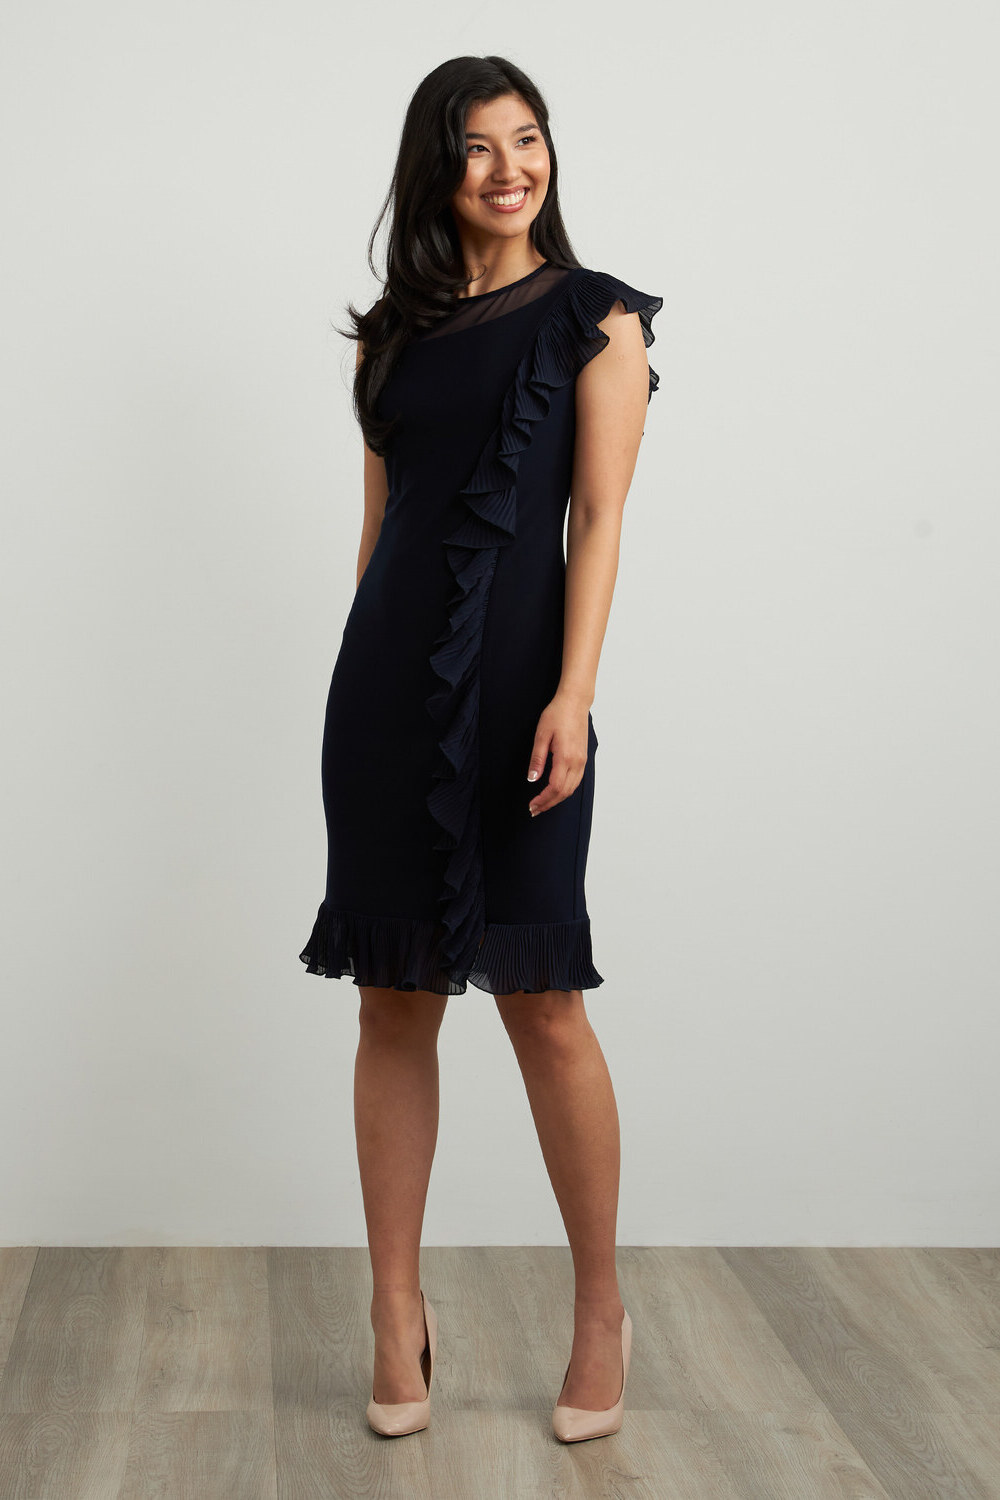 Joseph Ribkoff Frilled Dress Style 211476. Midnight Blue